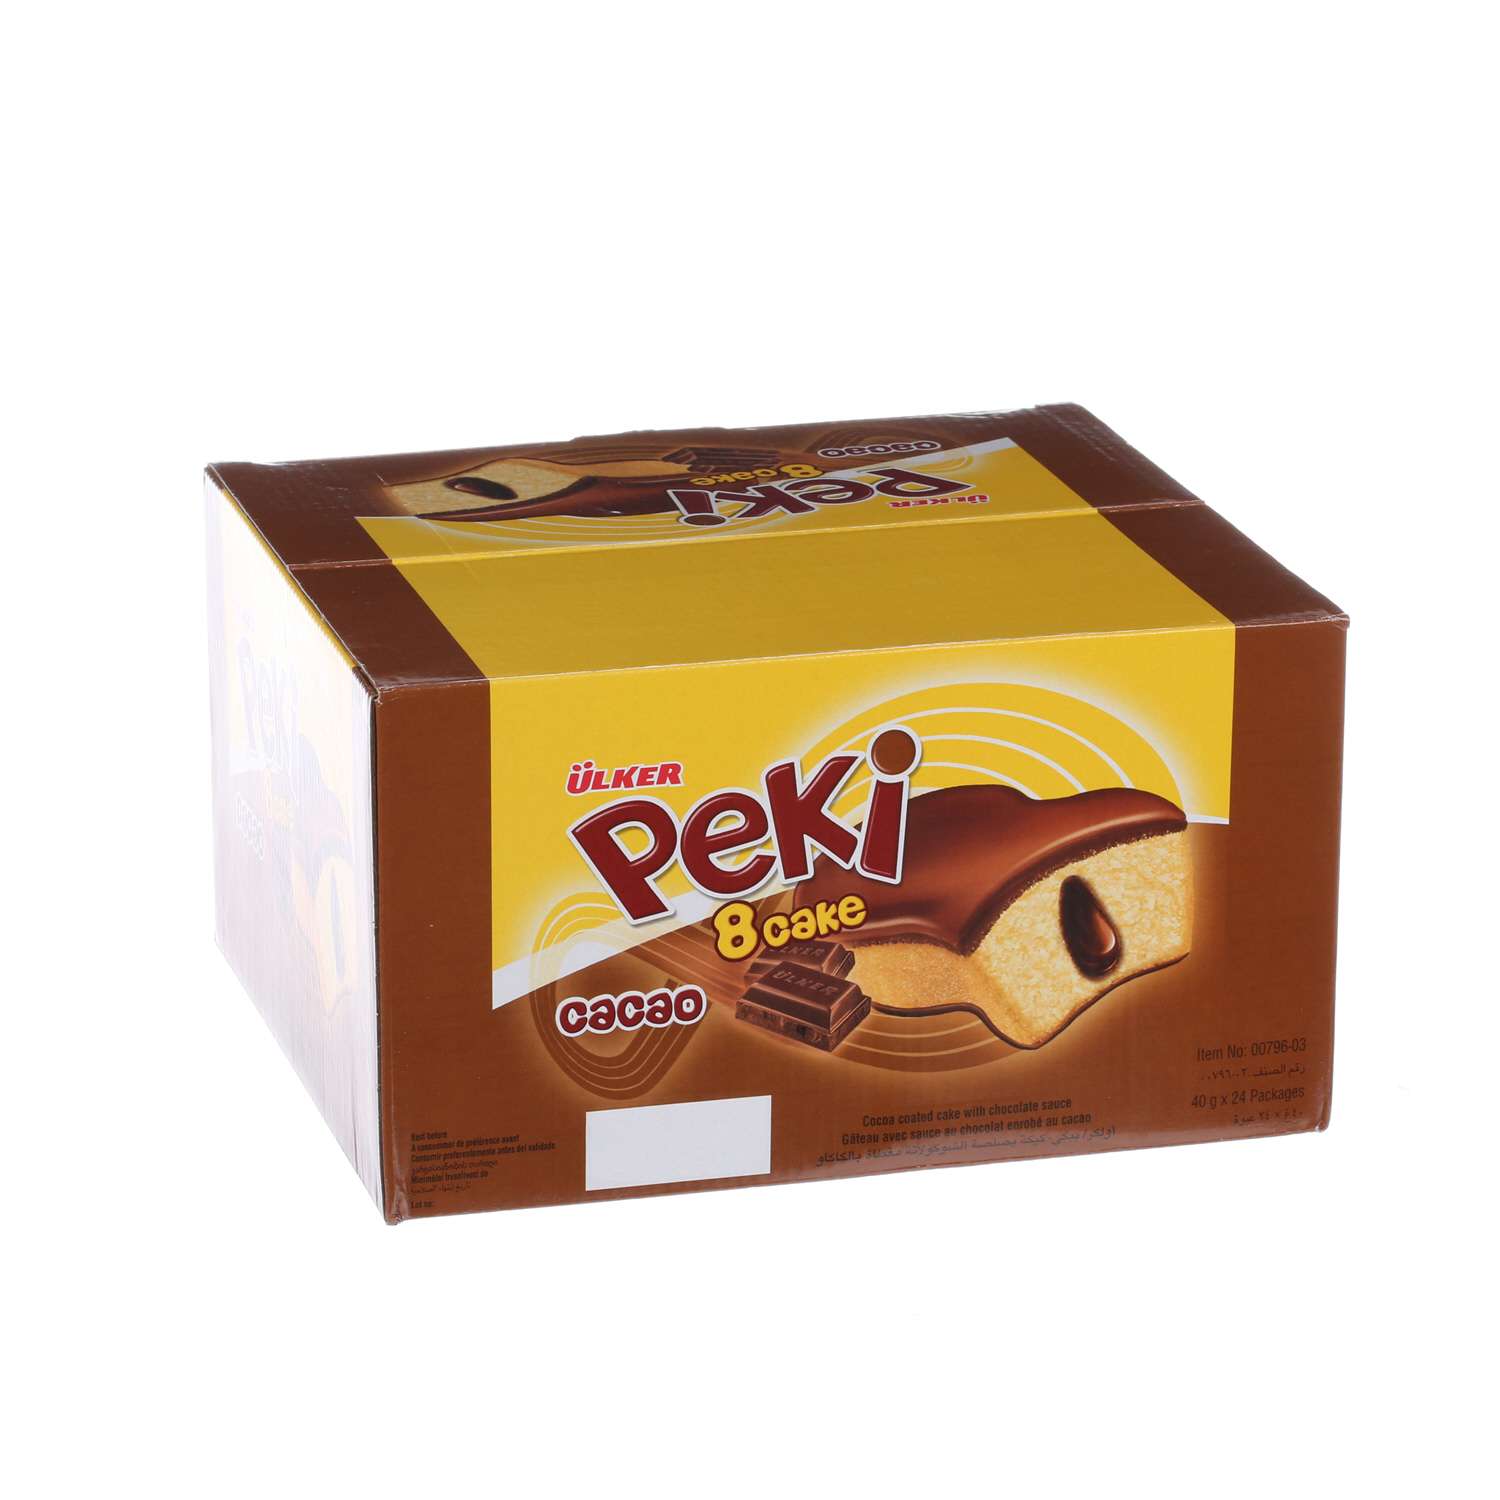 Ulker Peki 8 Cacao Cake 40gm × 24'S